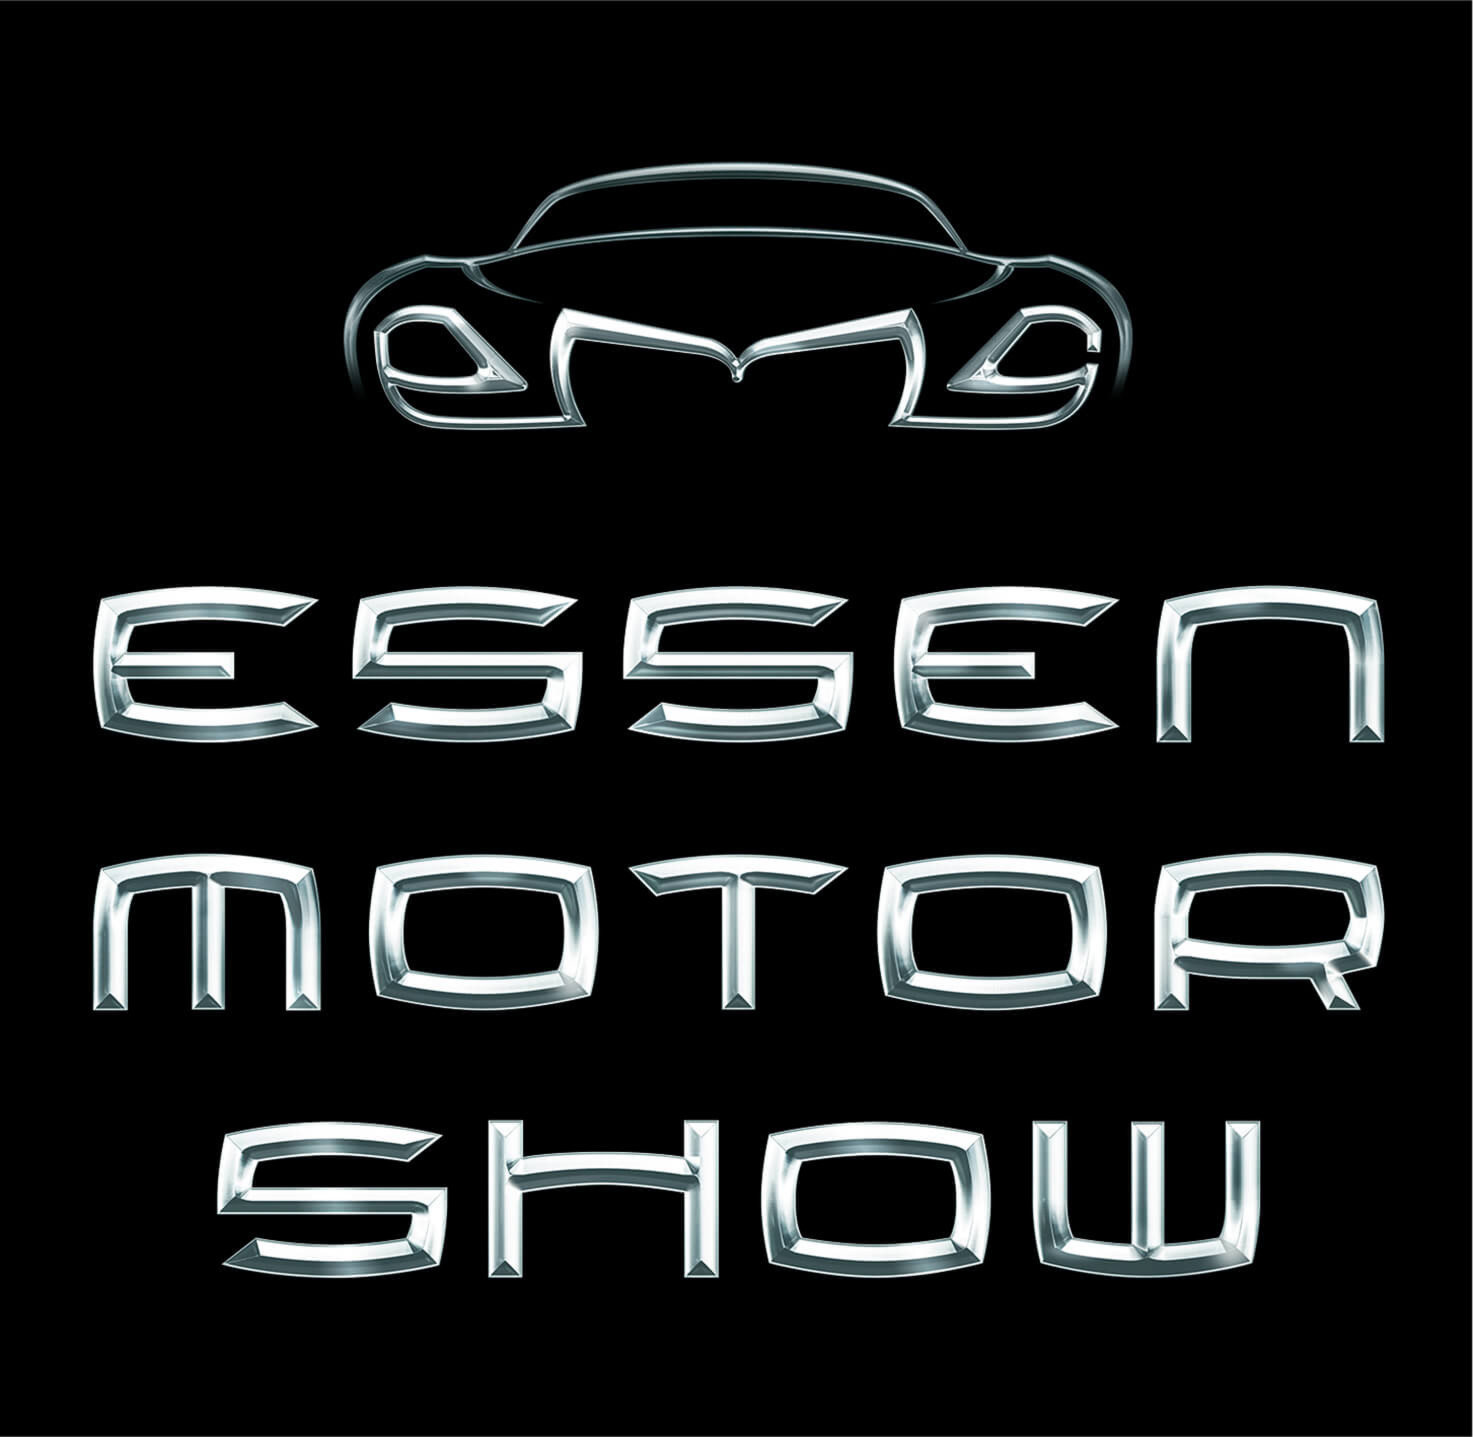 Essen Motor Show 2018